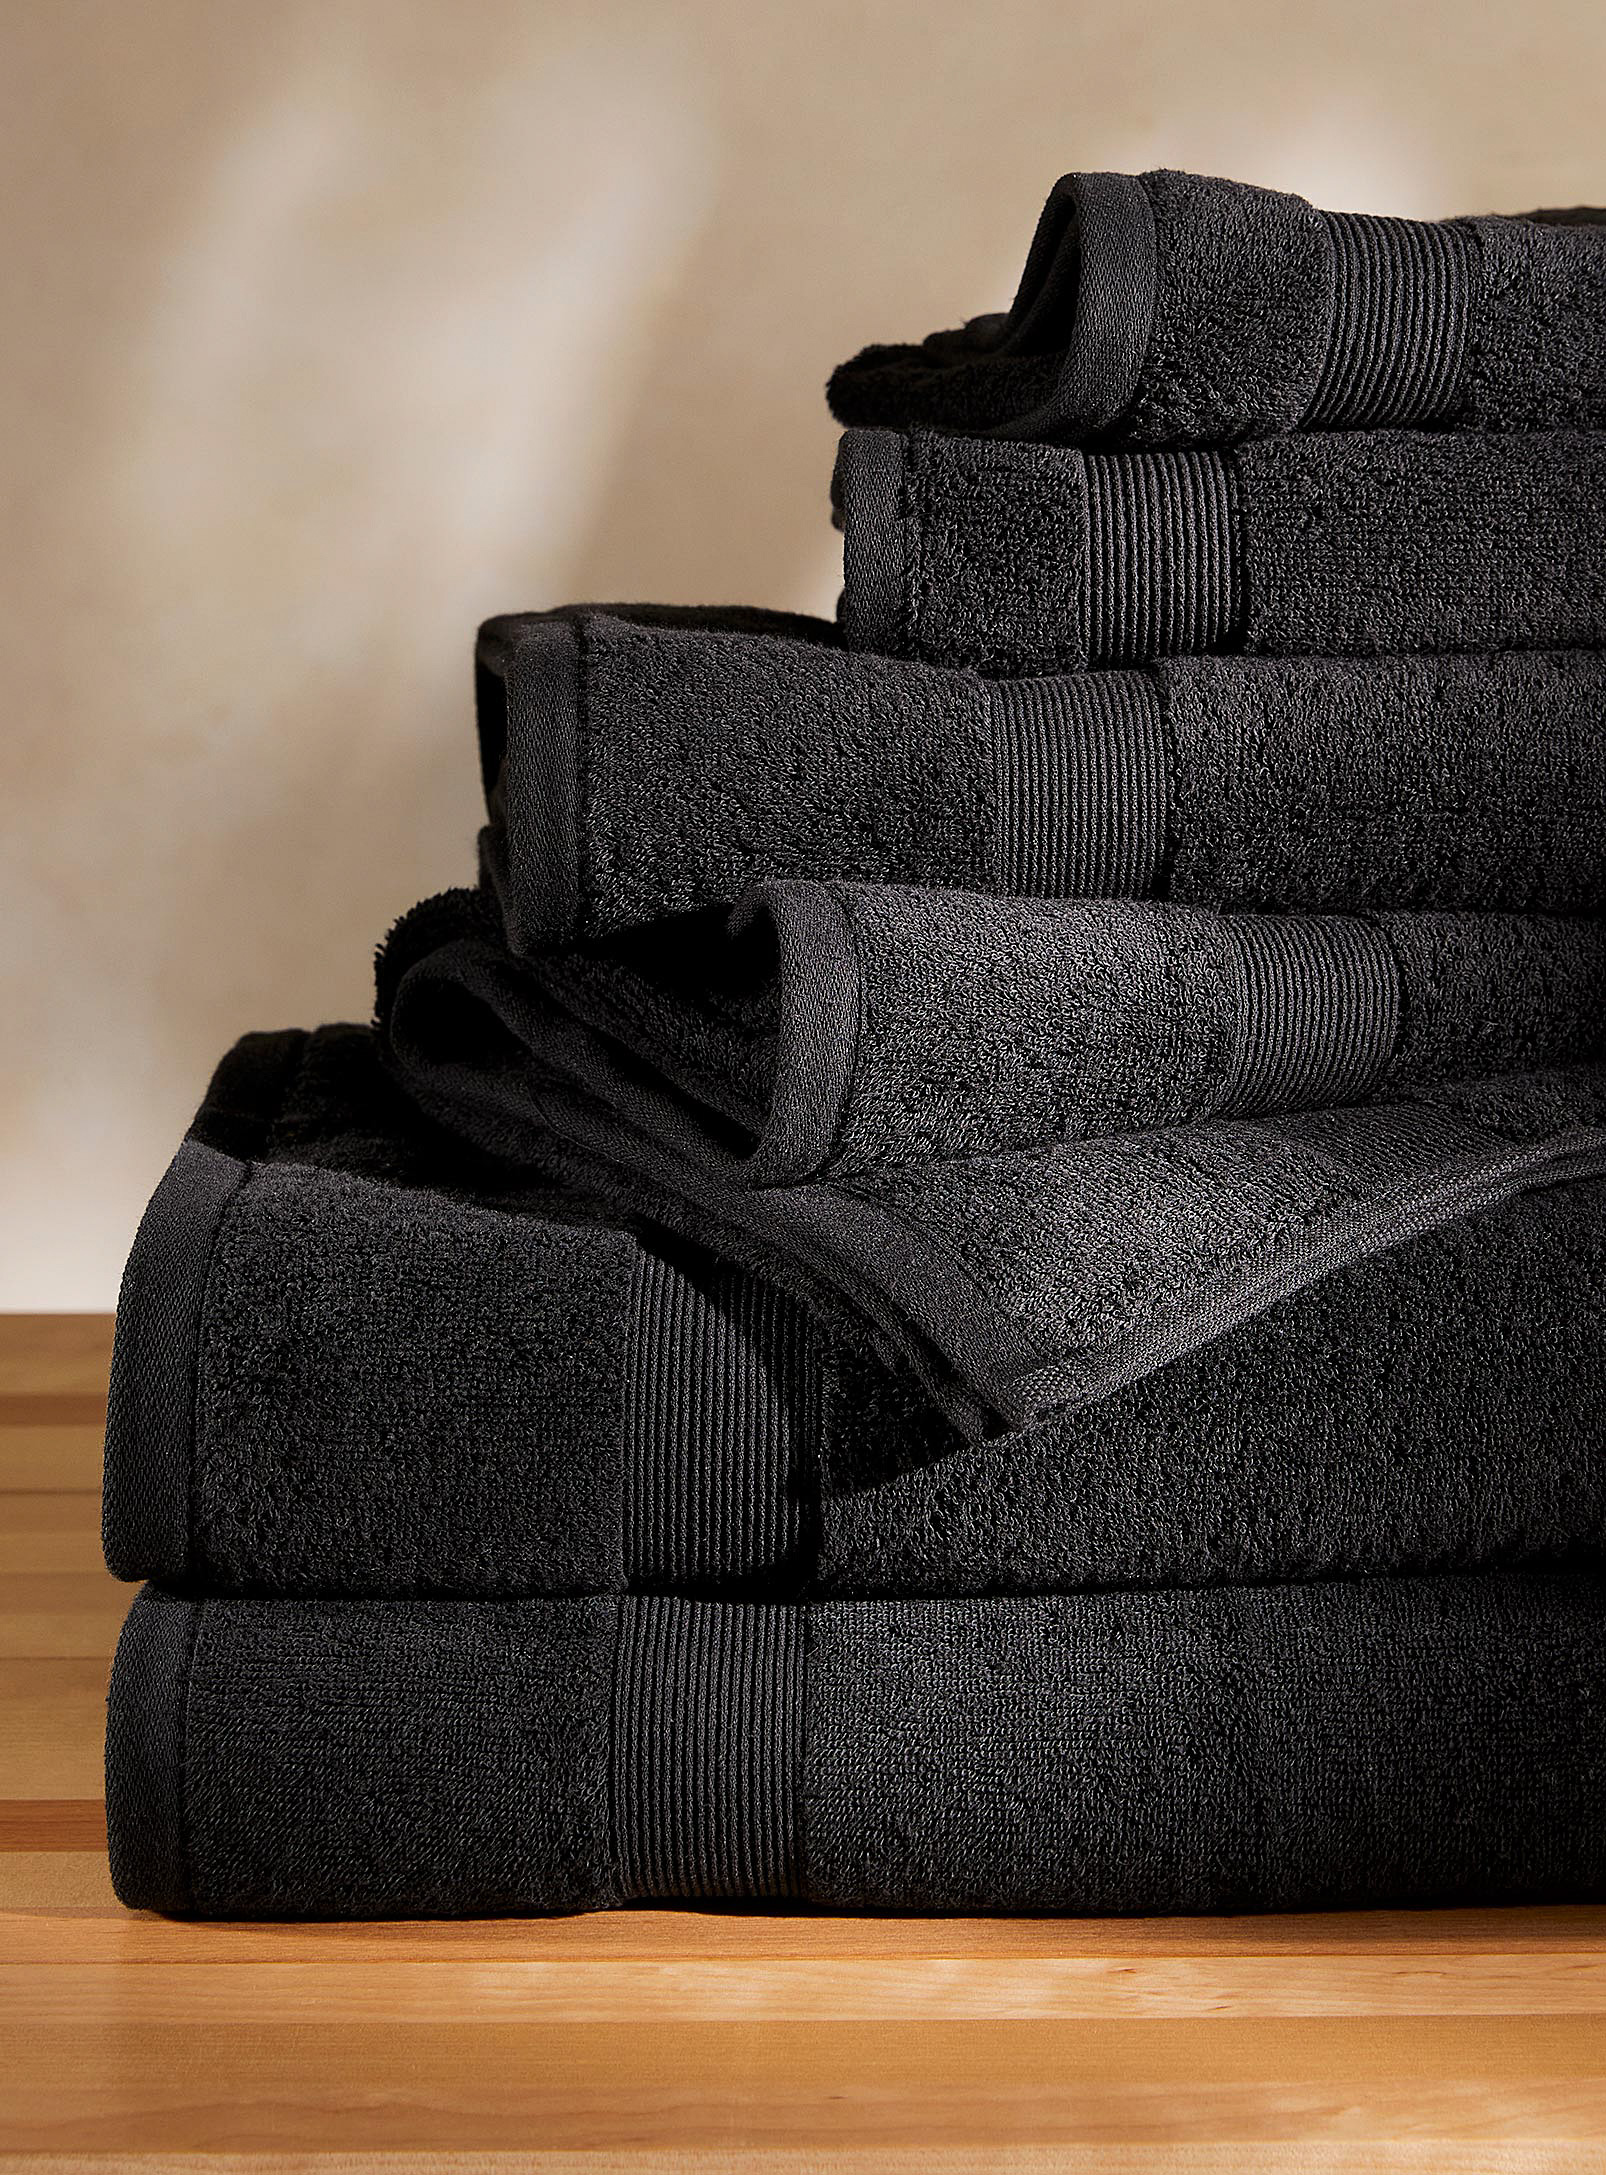 Simons Maison - Turkish cotton towels Soft and durable